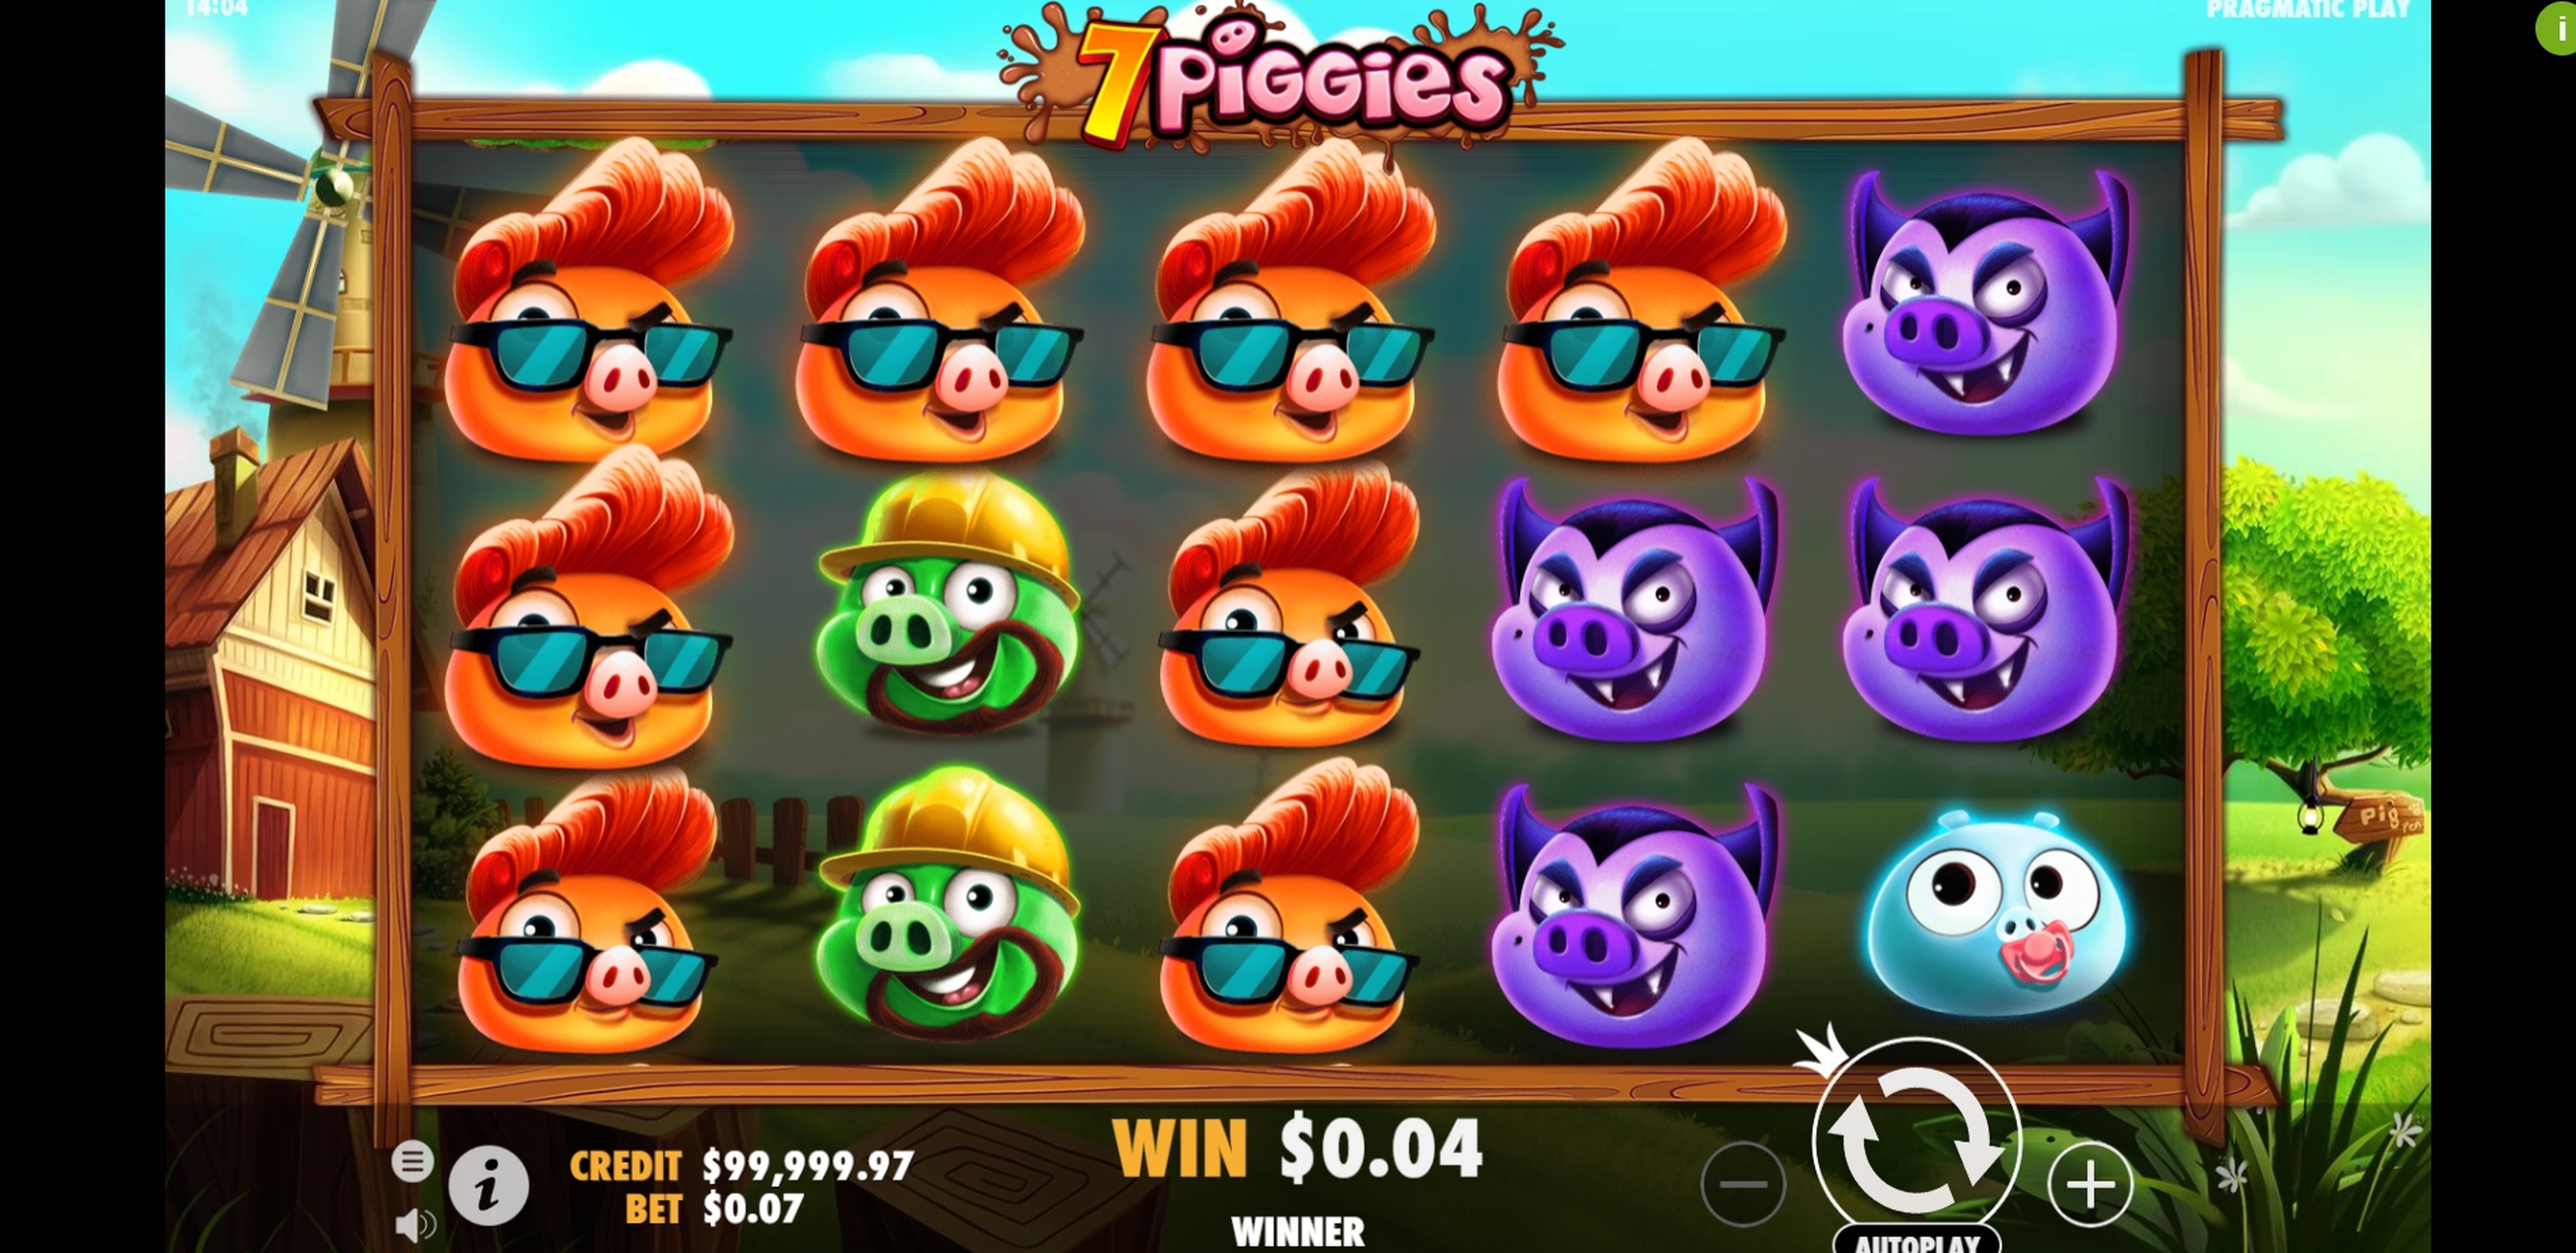 Win Money in 7 Piggies Free Slot Game by Pragmatic Play